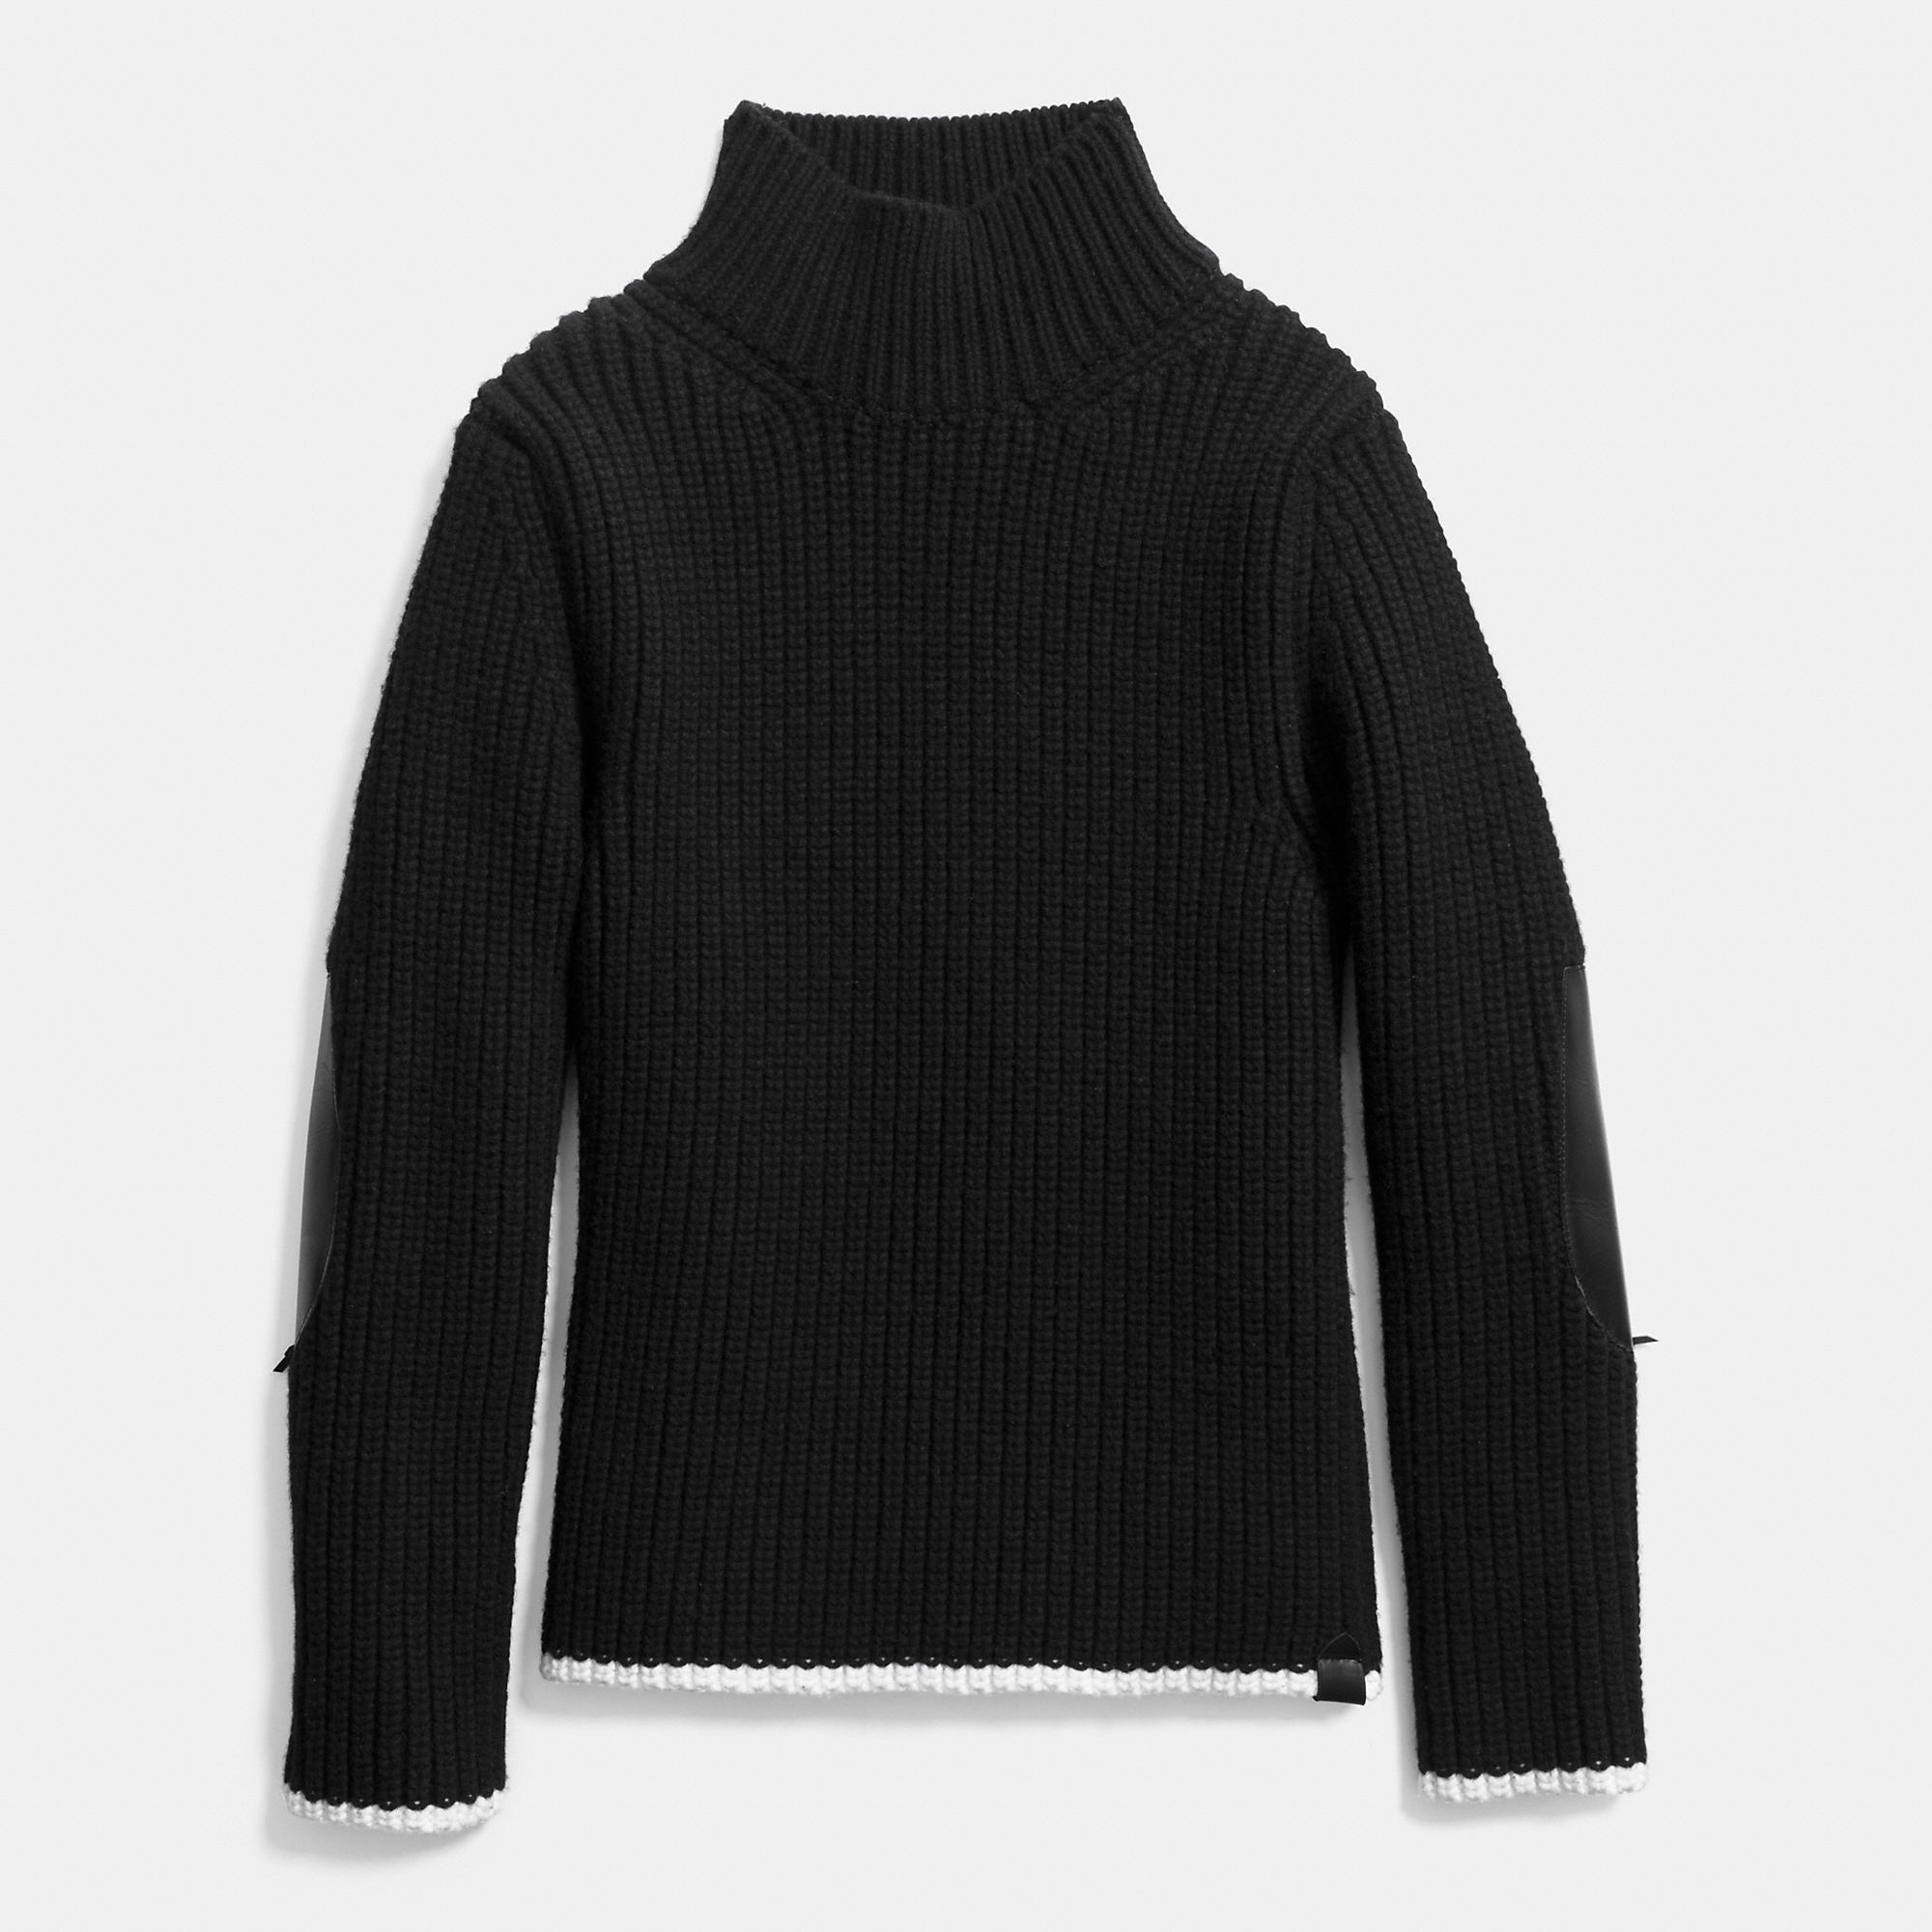 Aliexpress.com : Buy 2015 New Cashmere Sweater Men Brand V